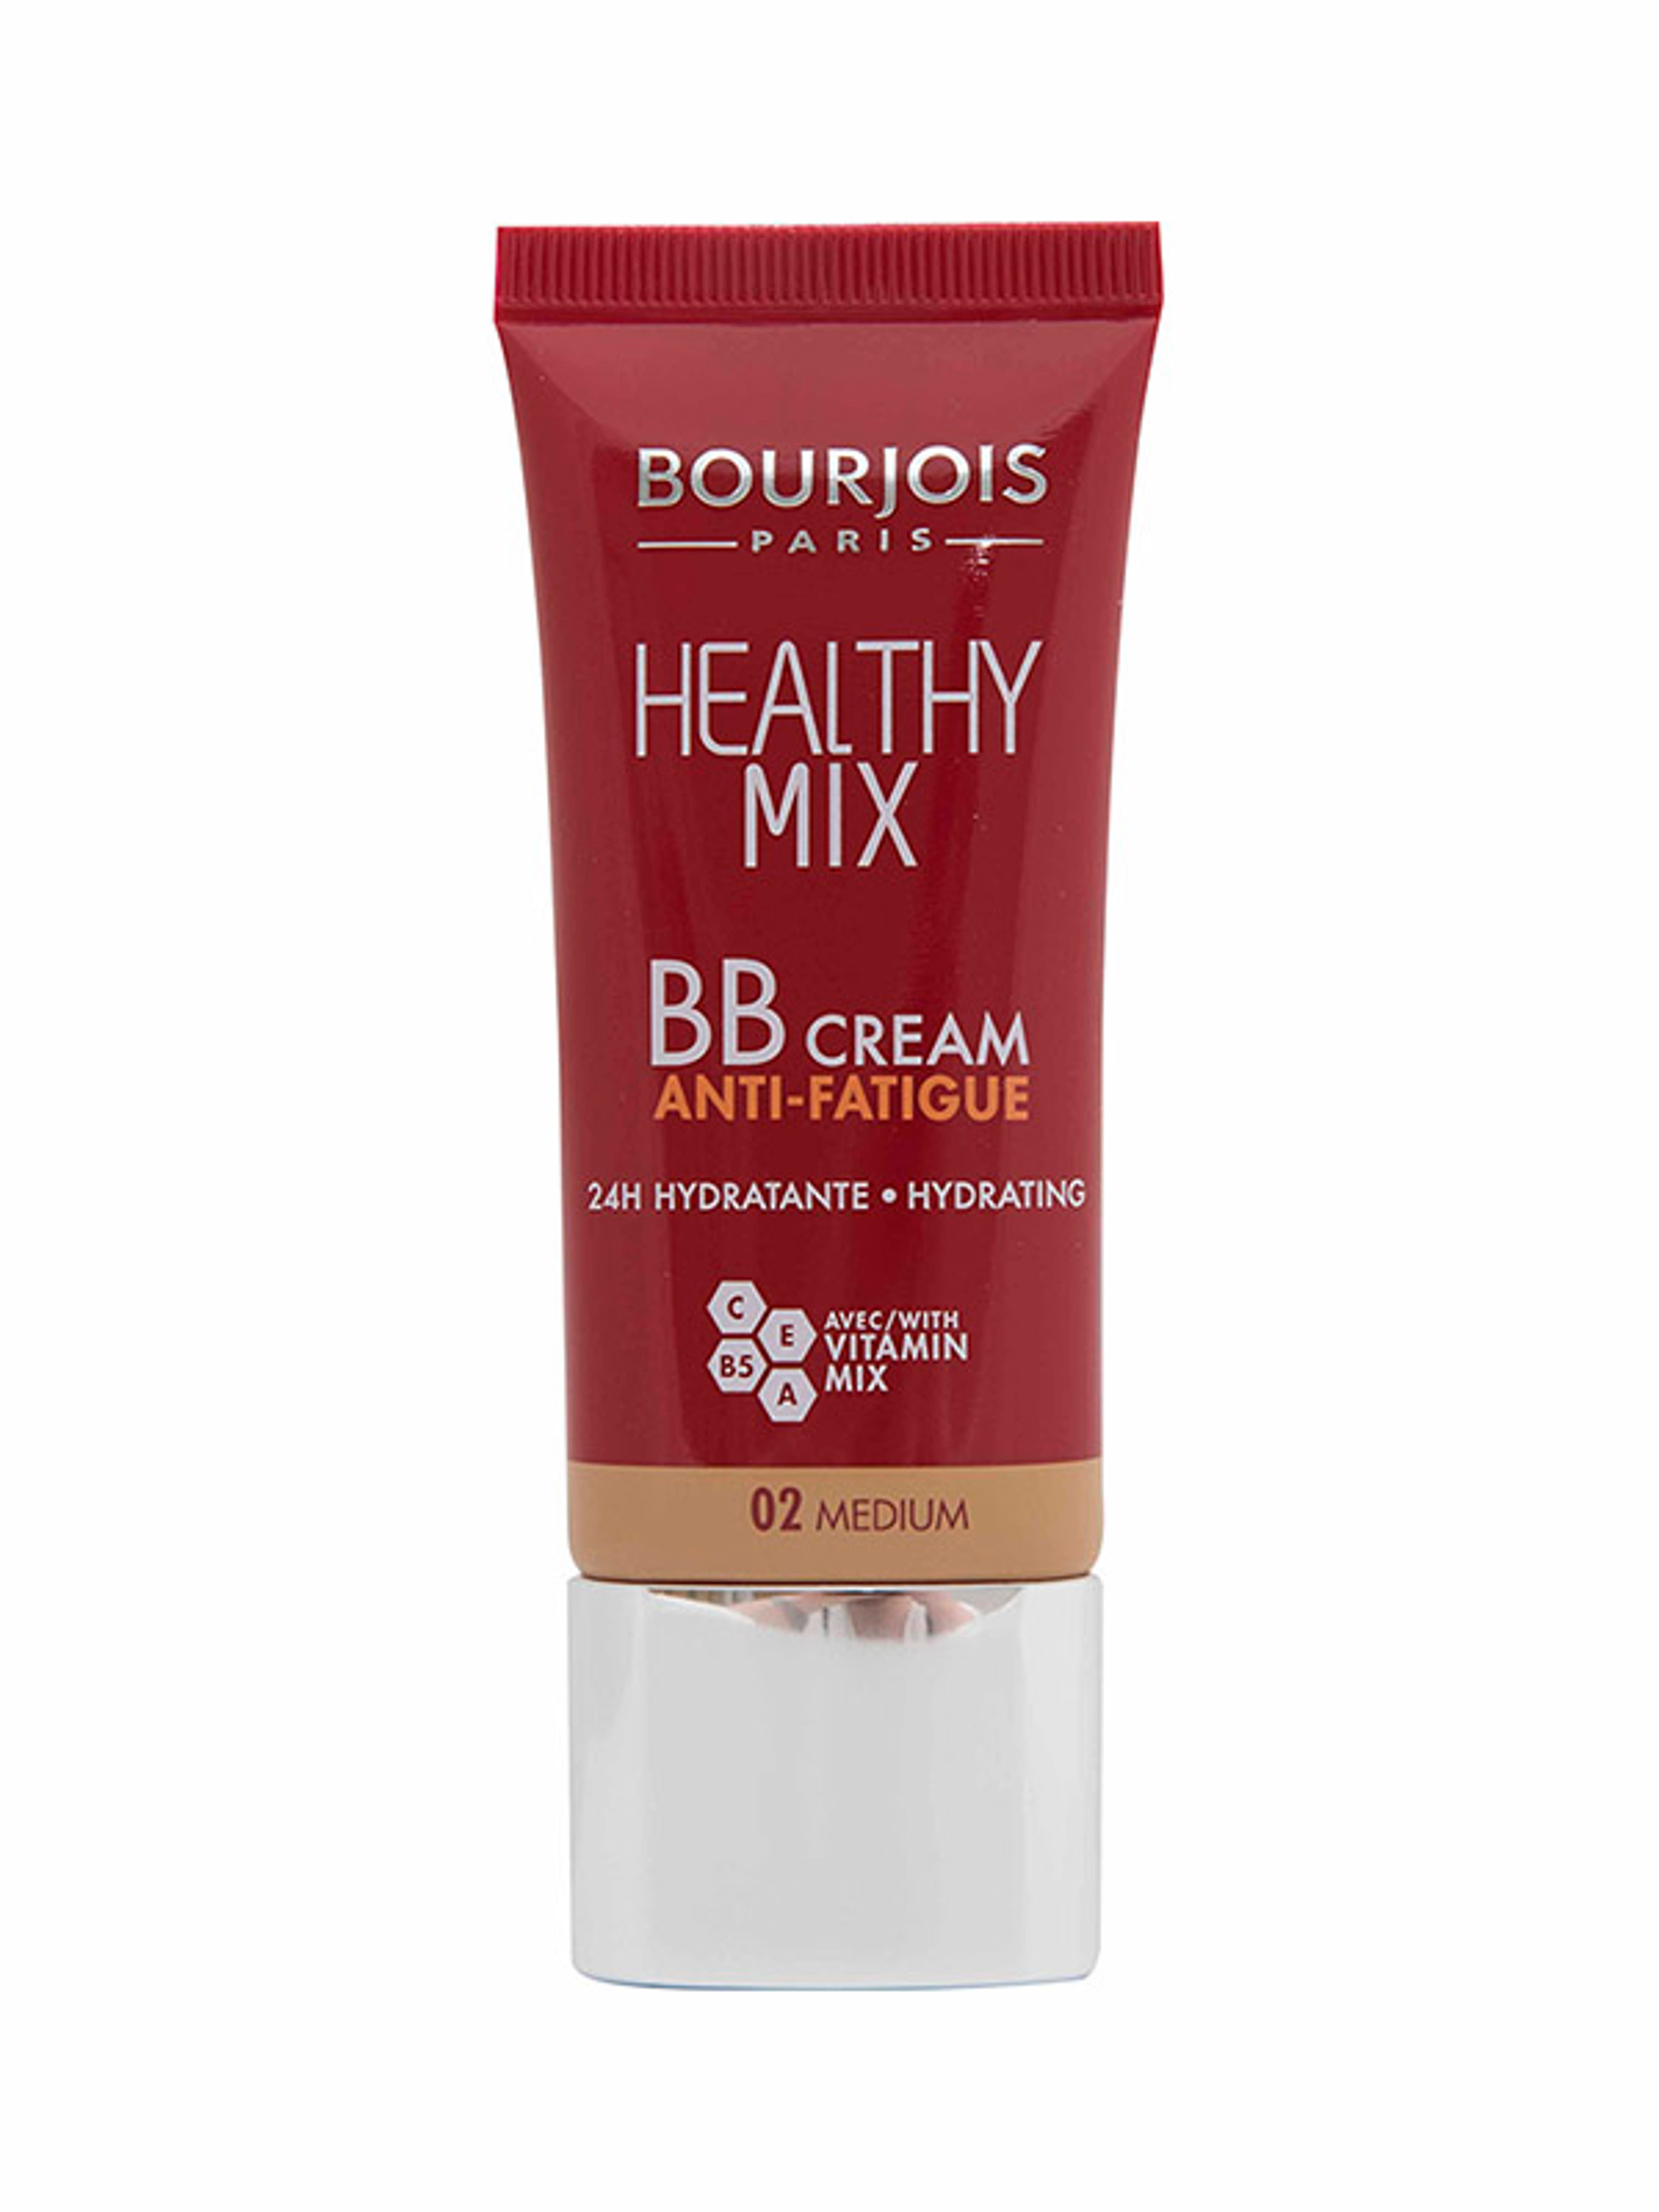 Bourjois arc bb krém healthy mix /002 - 1 db